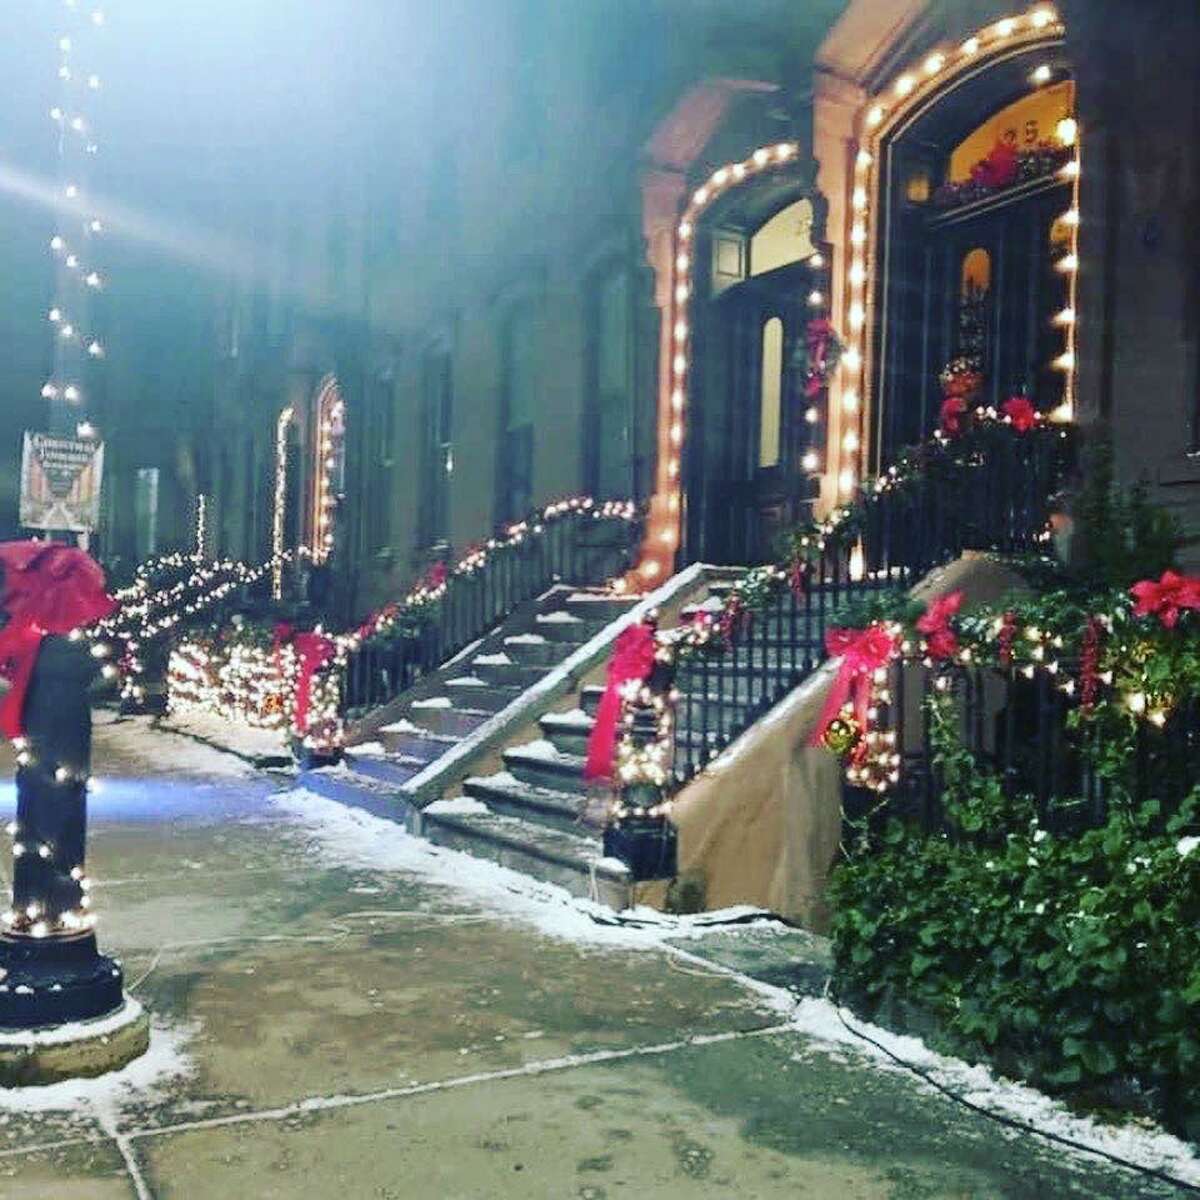 Hallmark movie "Christmas in Harlem" filmed in parts of Hartford, Conn. the weekend of Sept. 18- 19, 2021.